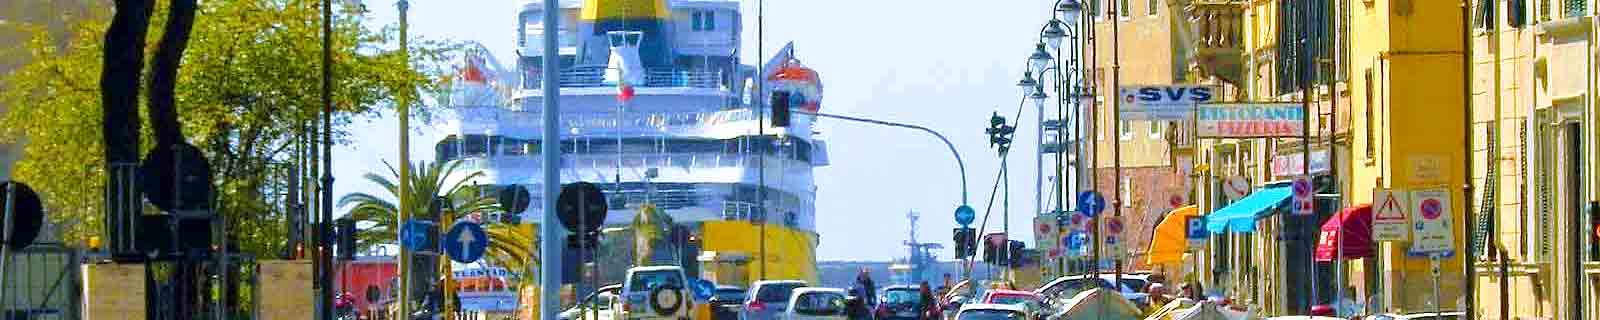 Photo of Livorno cruise port by IQCruising